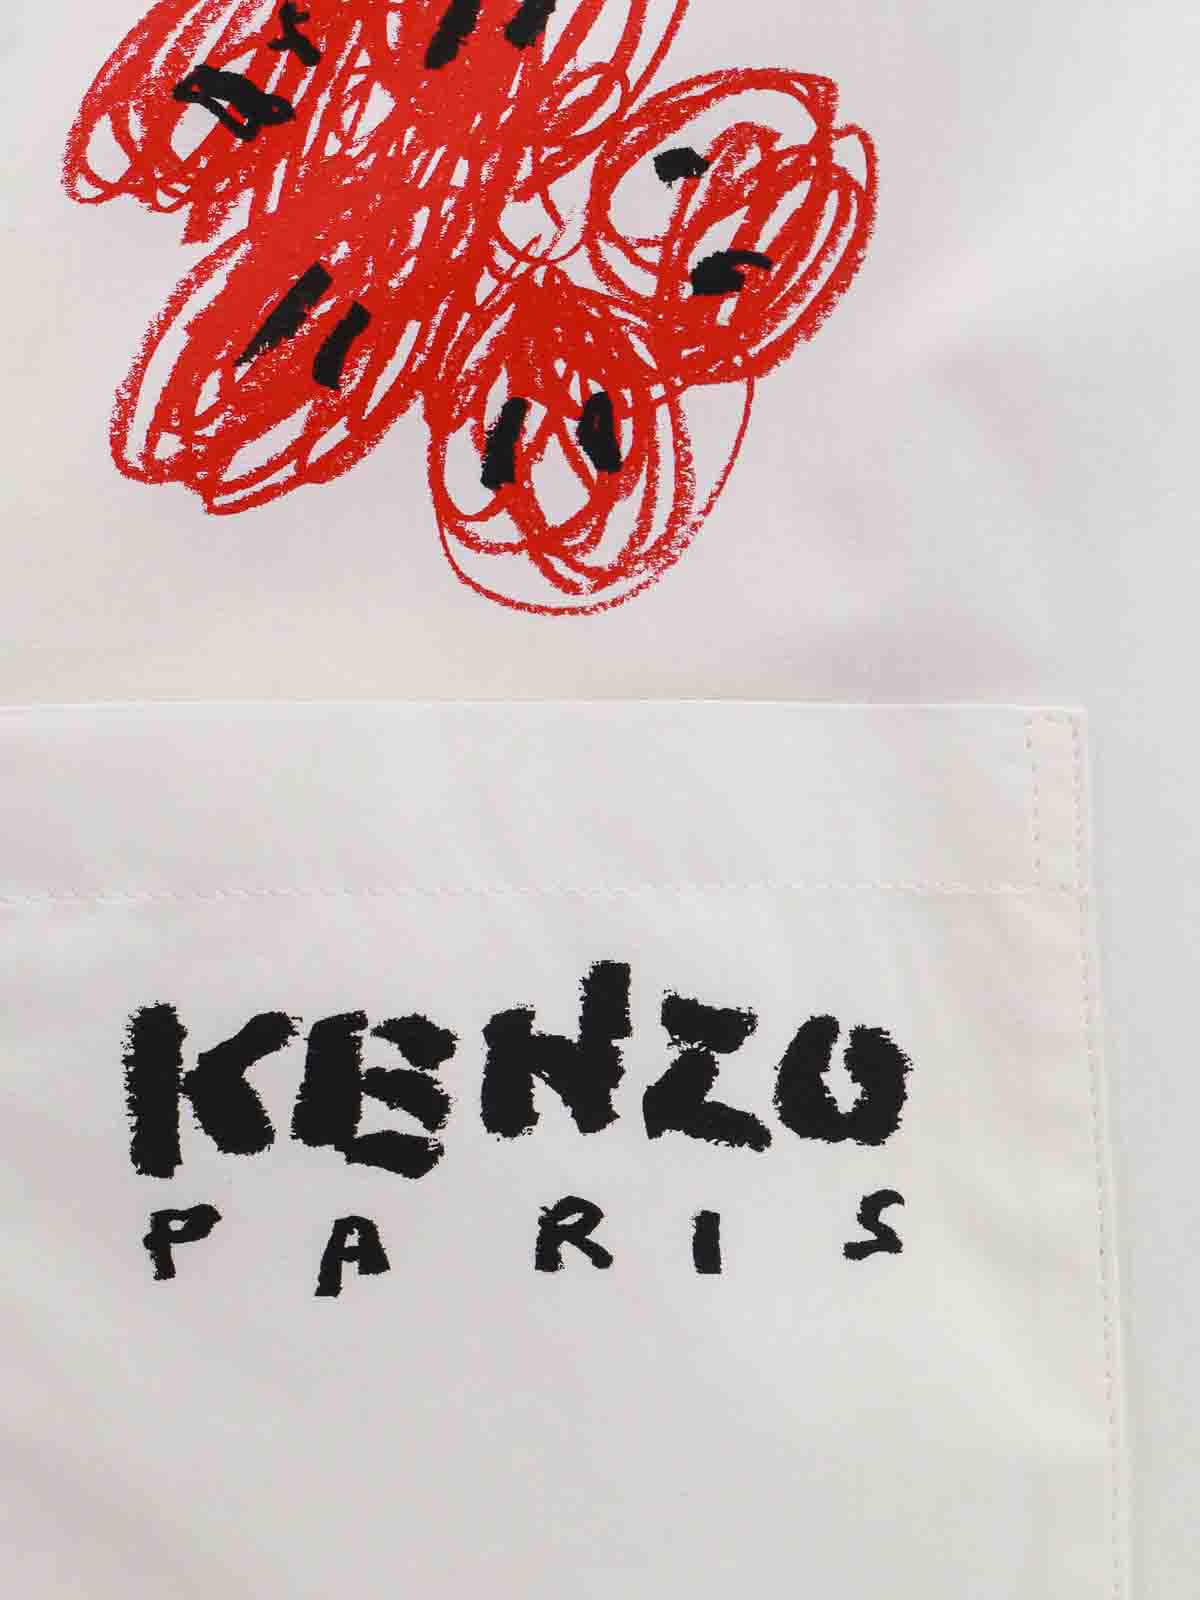 Shop Kenzo Camisa - Blanco